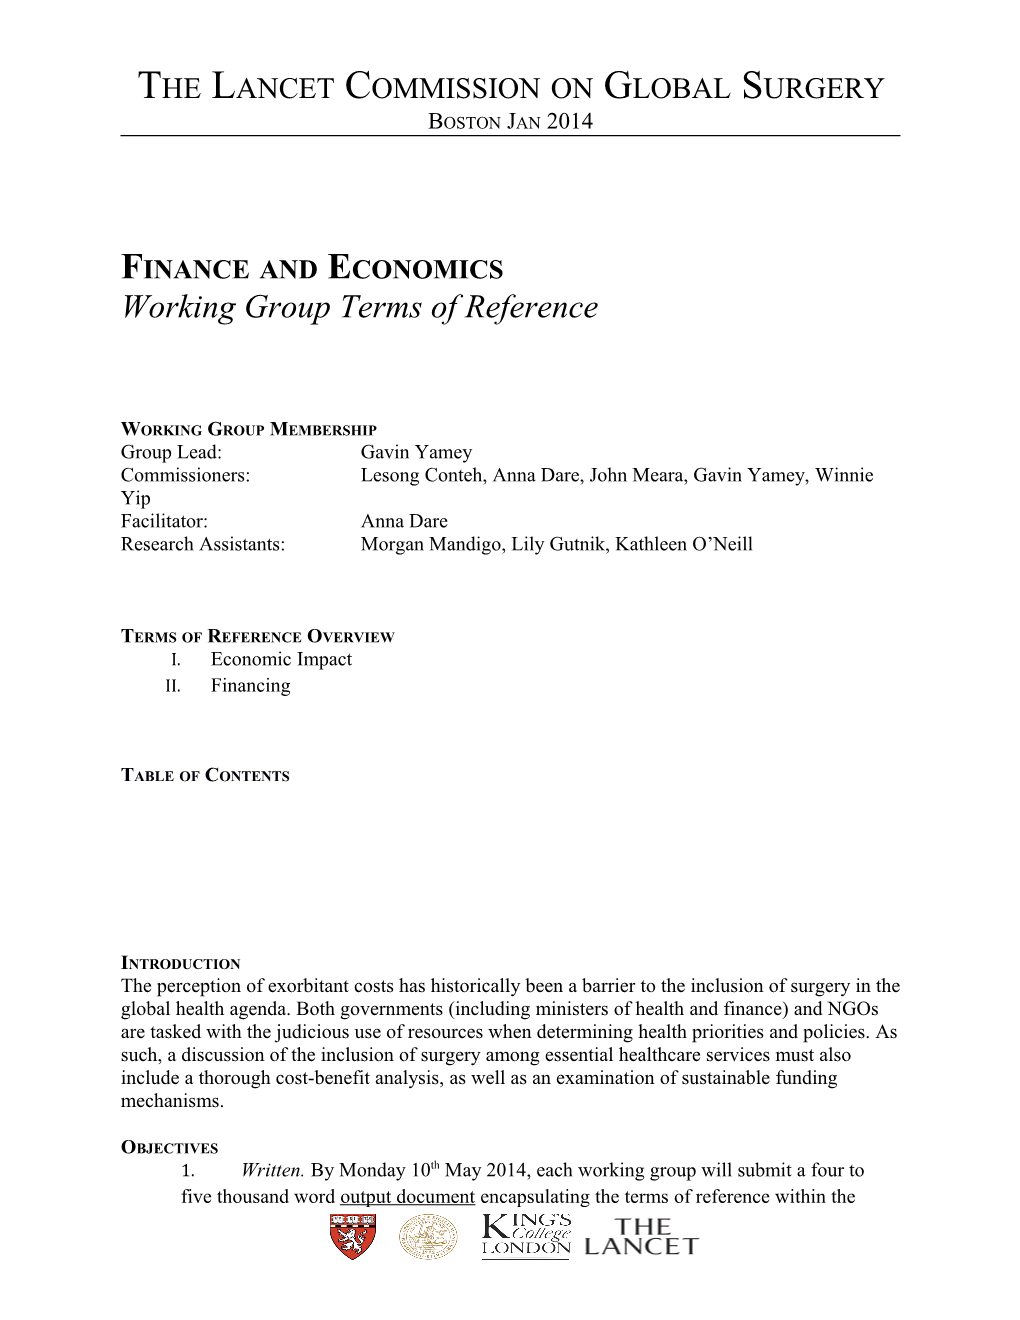 Finance and Economics